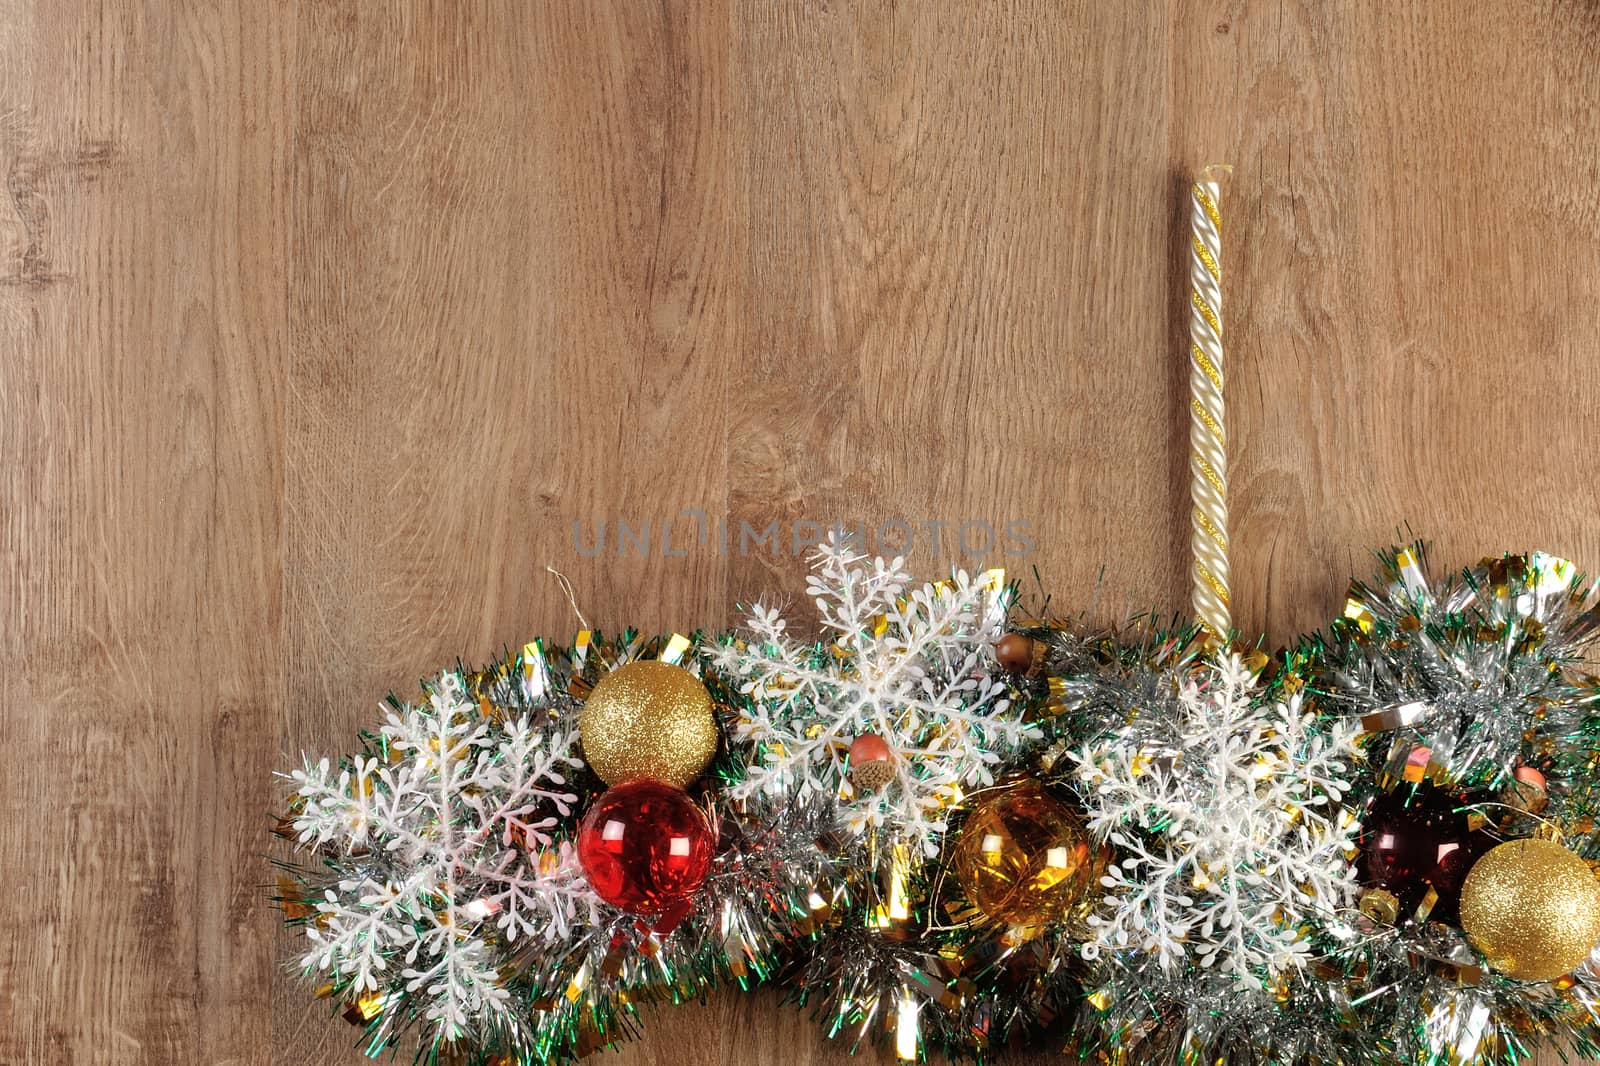 christmas balls and candle on wood floor